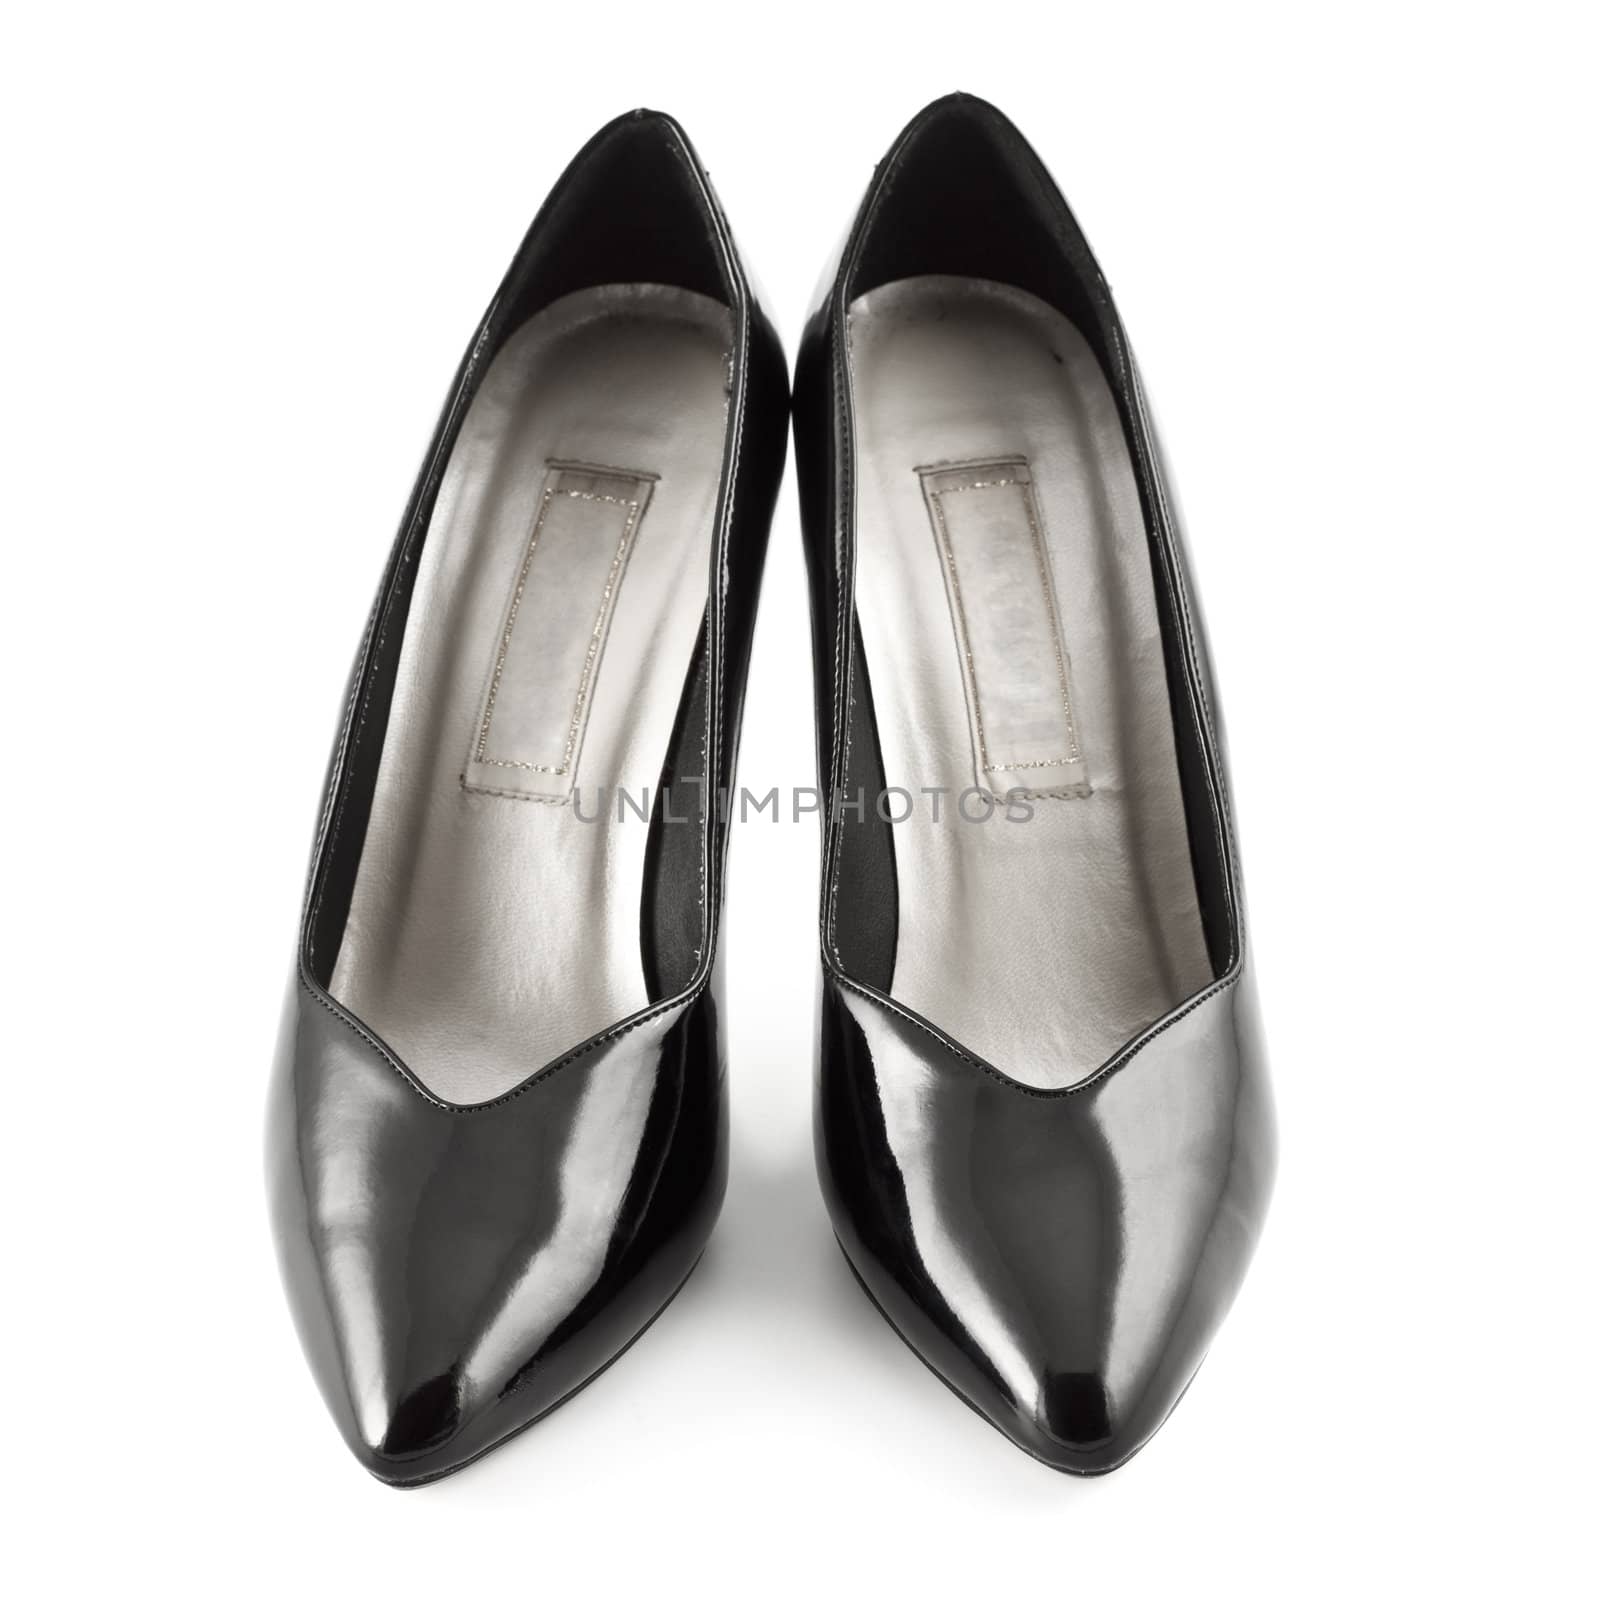 High Heels Female Shoes by petr_malyshev